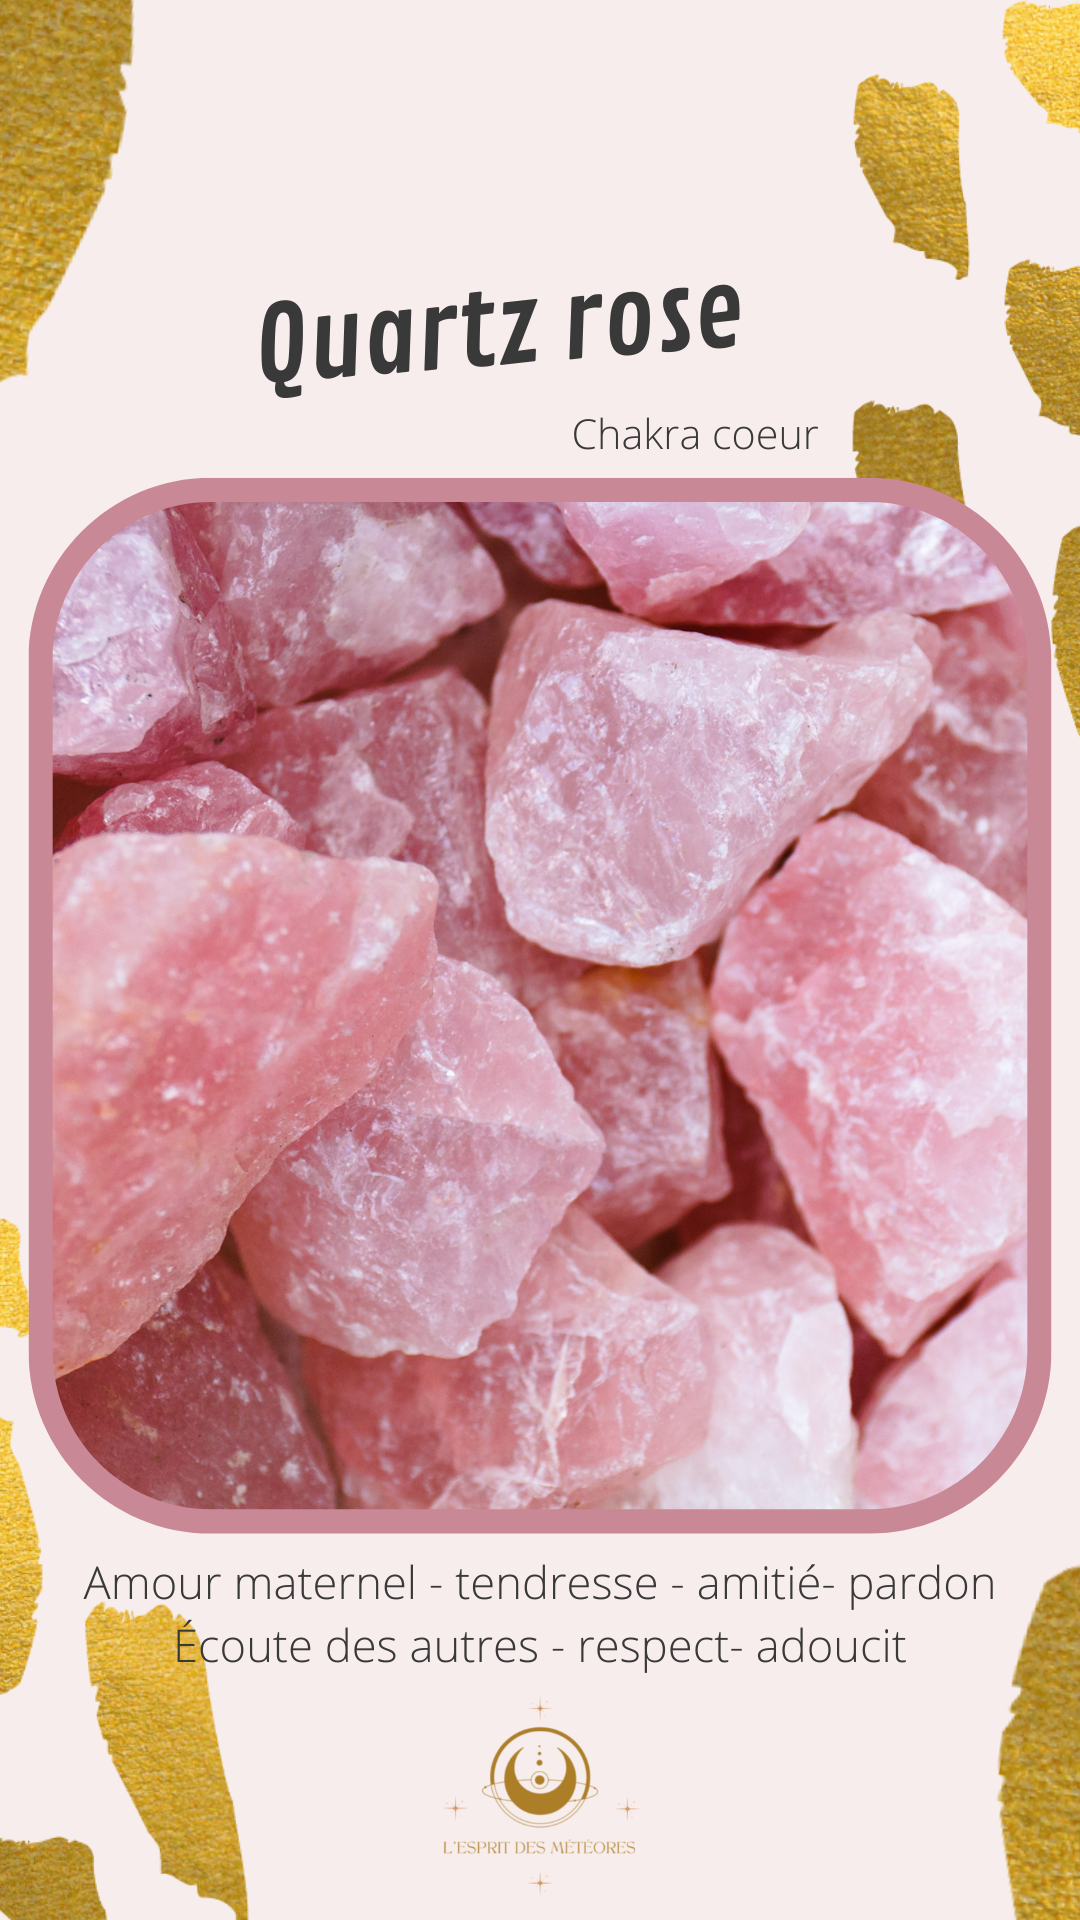 Triangle d'or (améthyste/cristal de roche/quartz rose) emma eggs